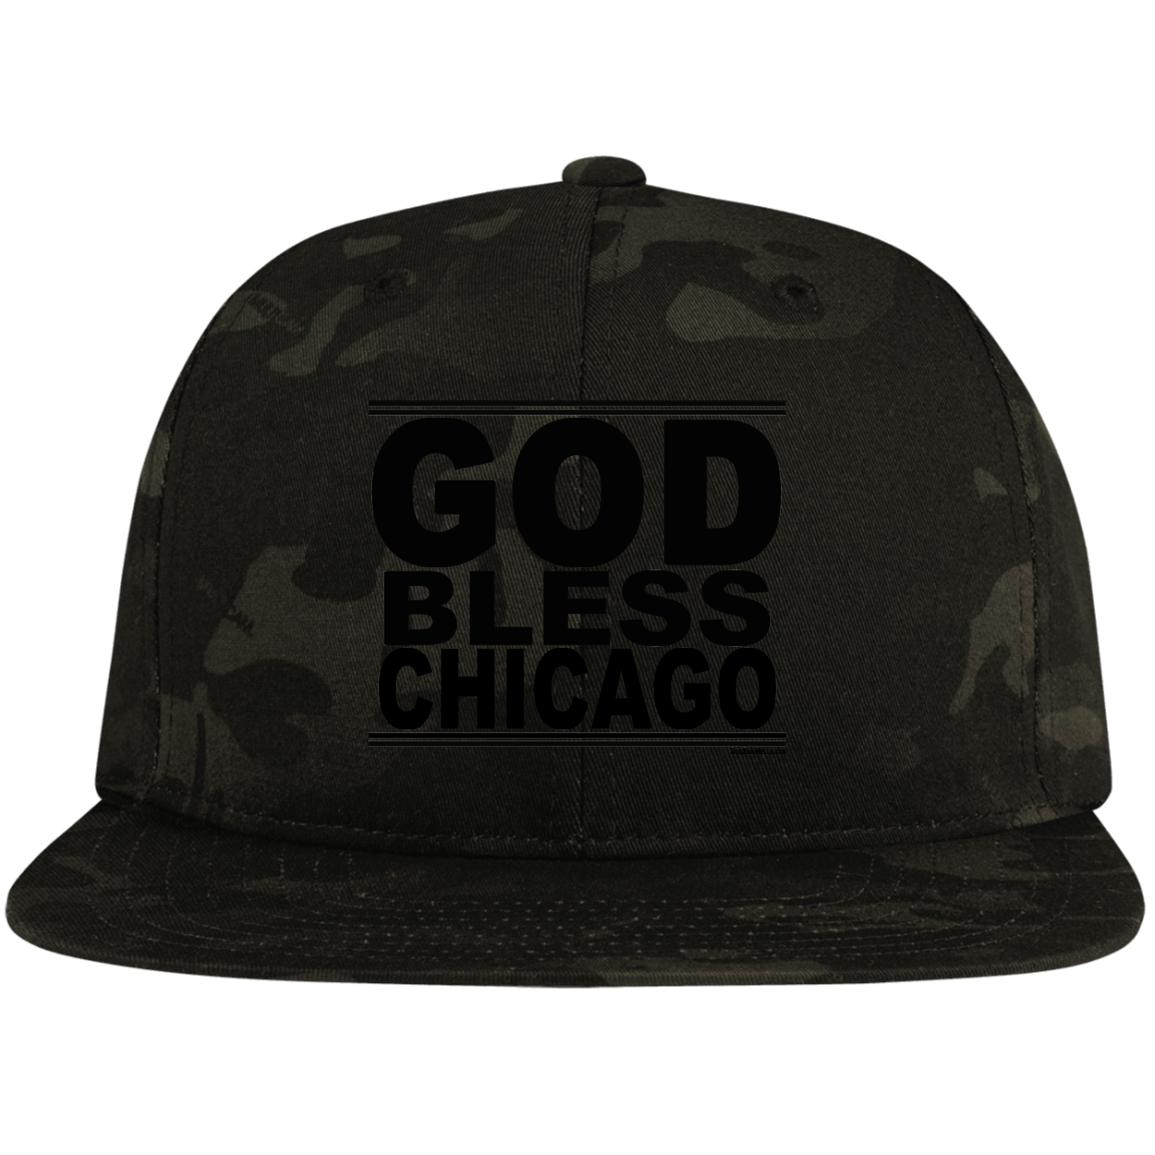 #GodBlessChicago - Snapback Hat